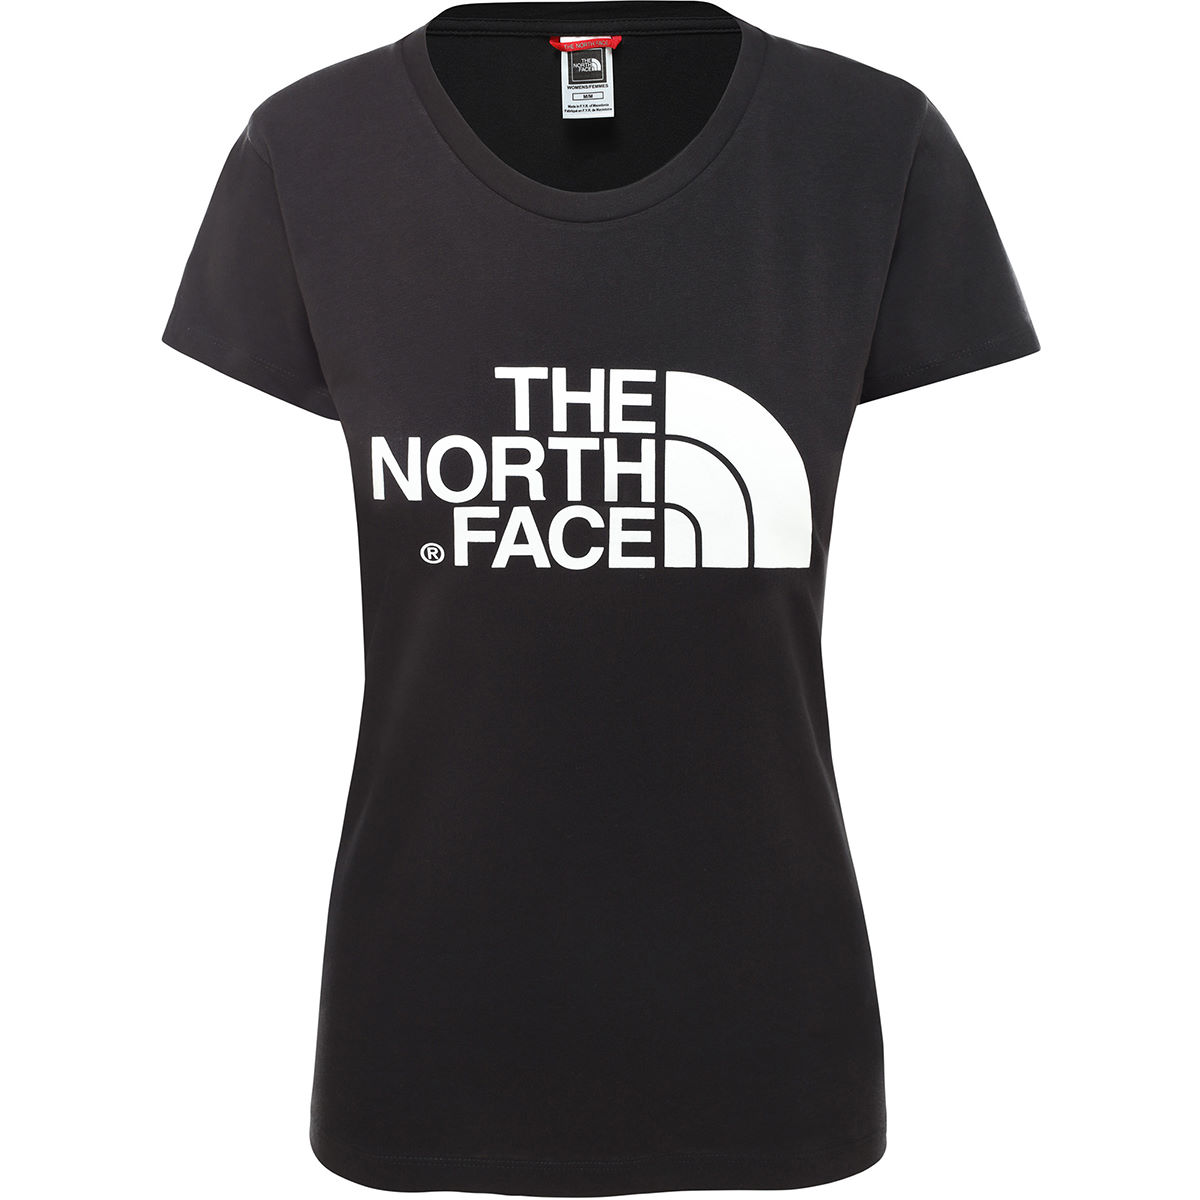 Camiseta The North Face Easy para mujer - Camisetas